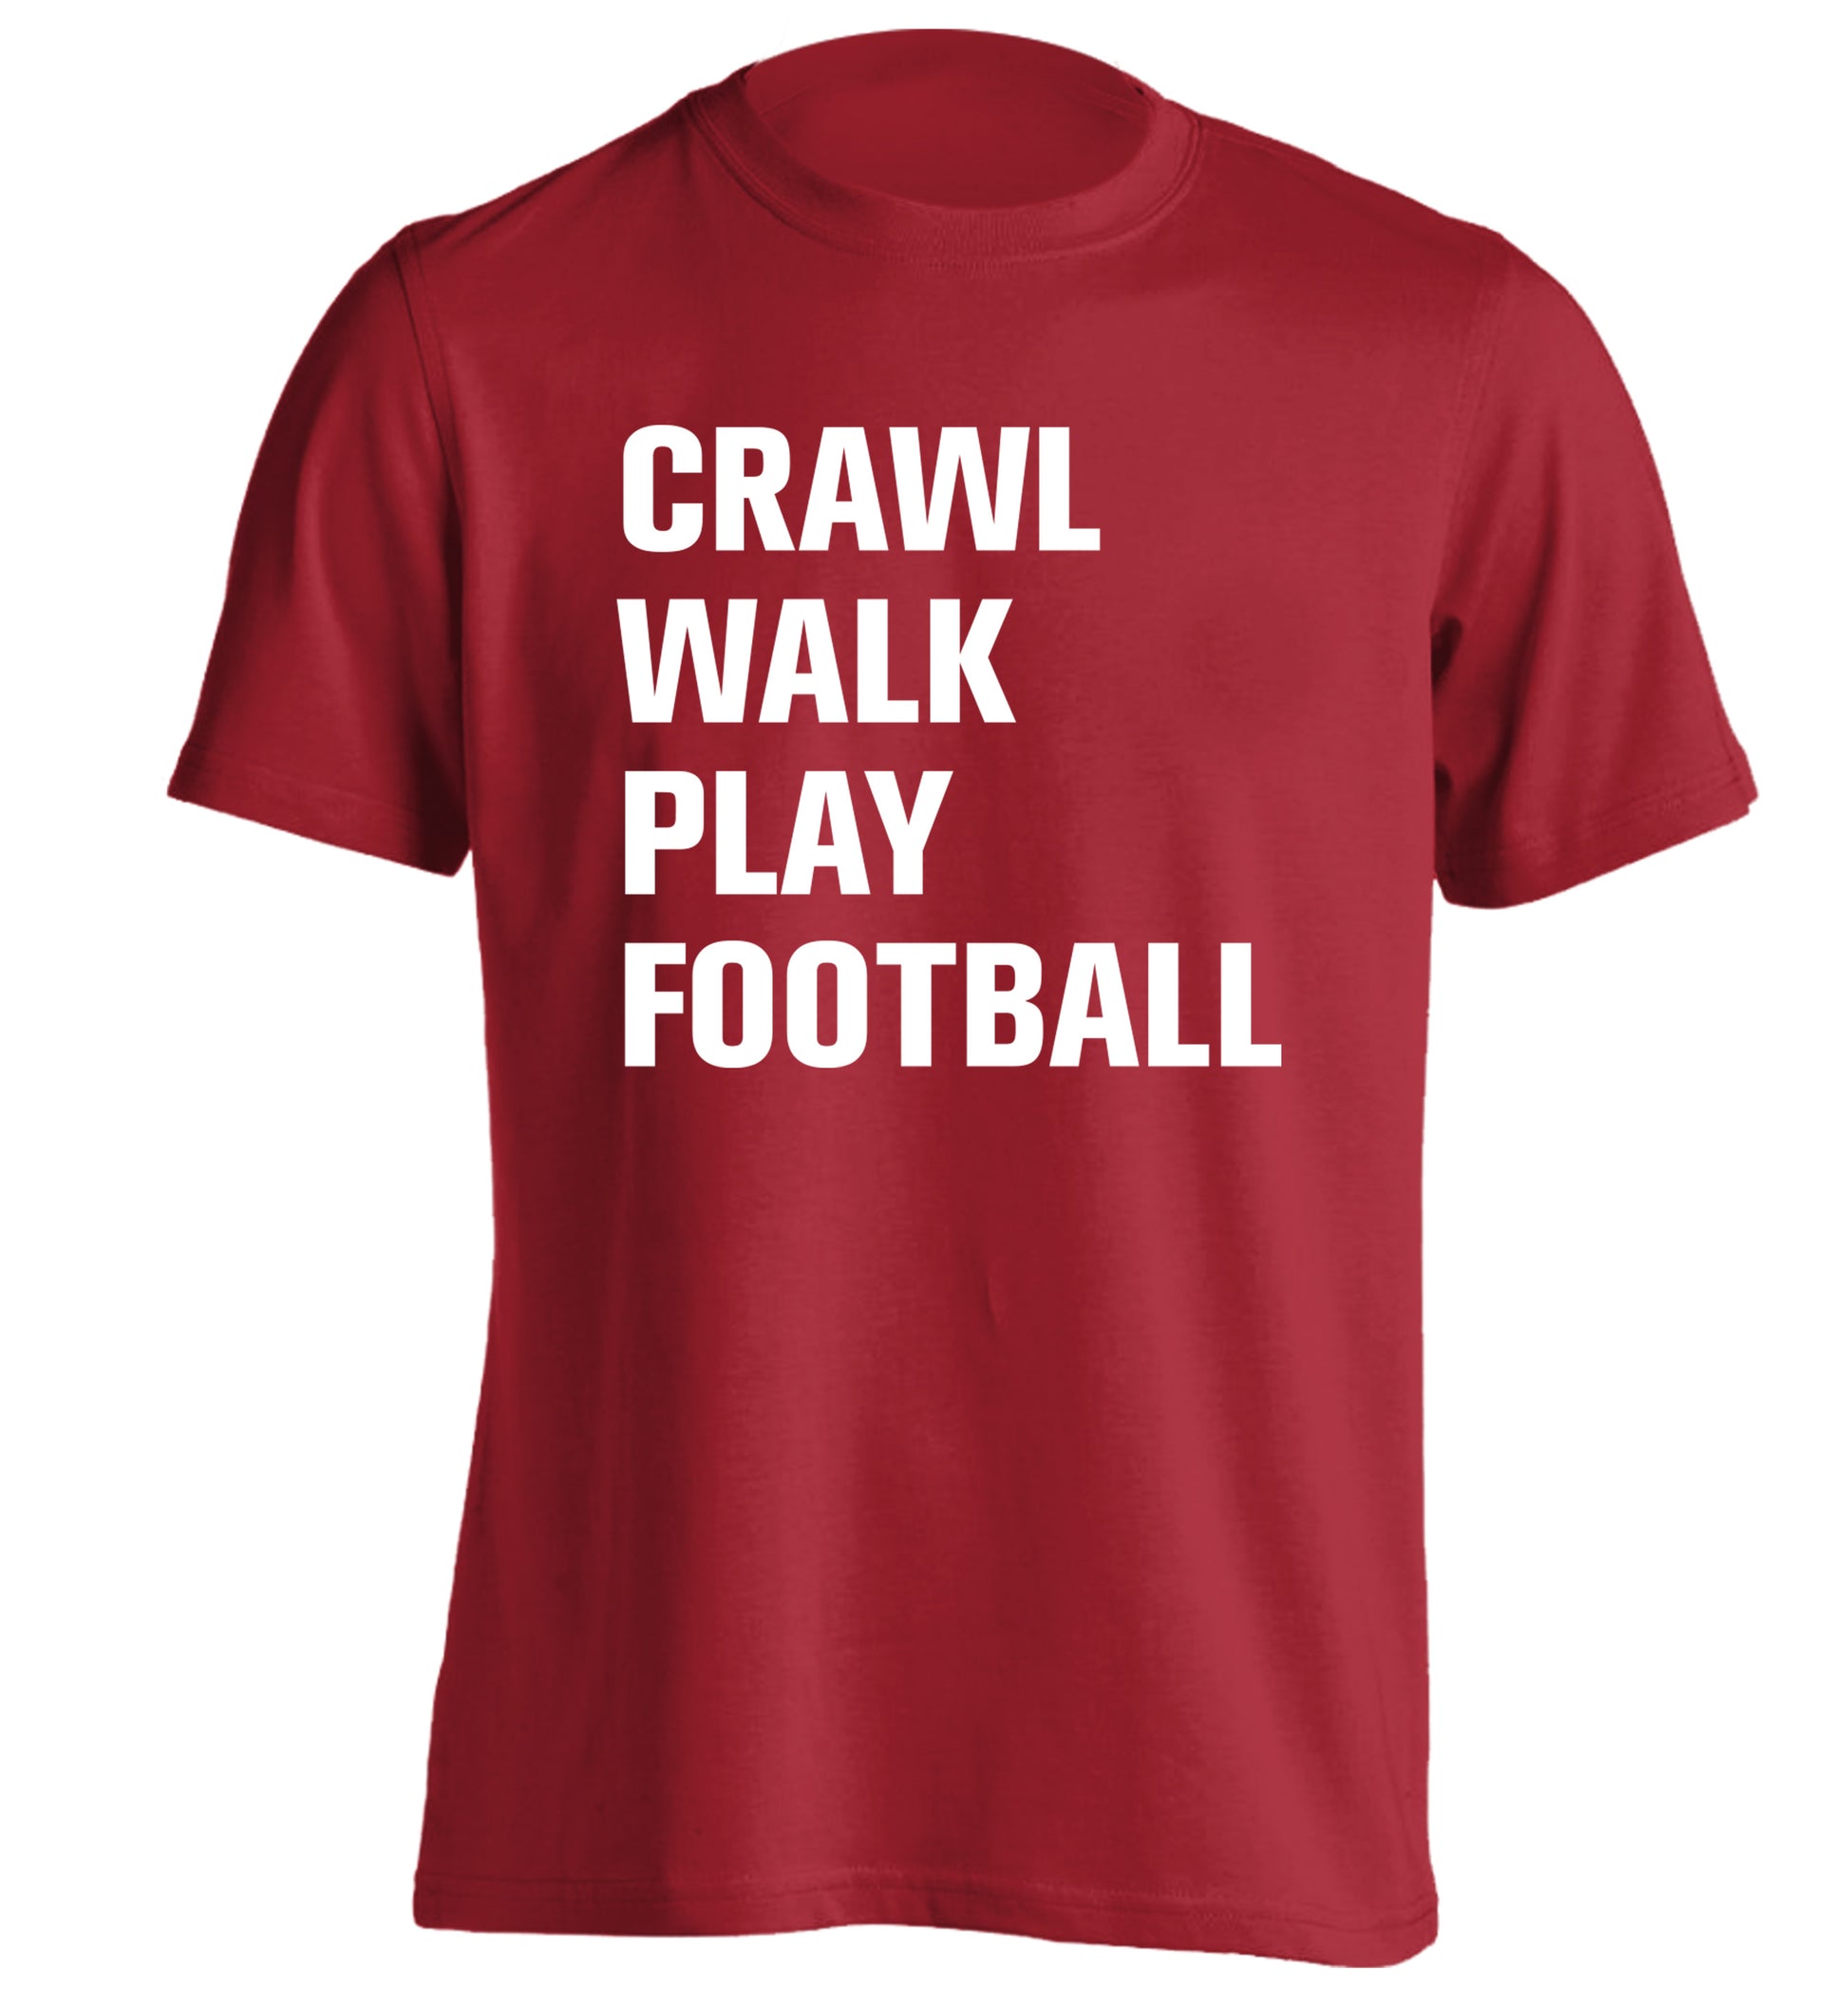 Crawl, walk, play football adults unisex red Tshirt 2XL